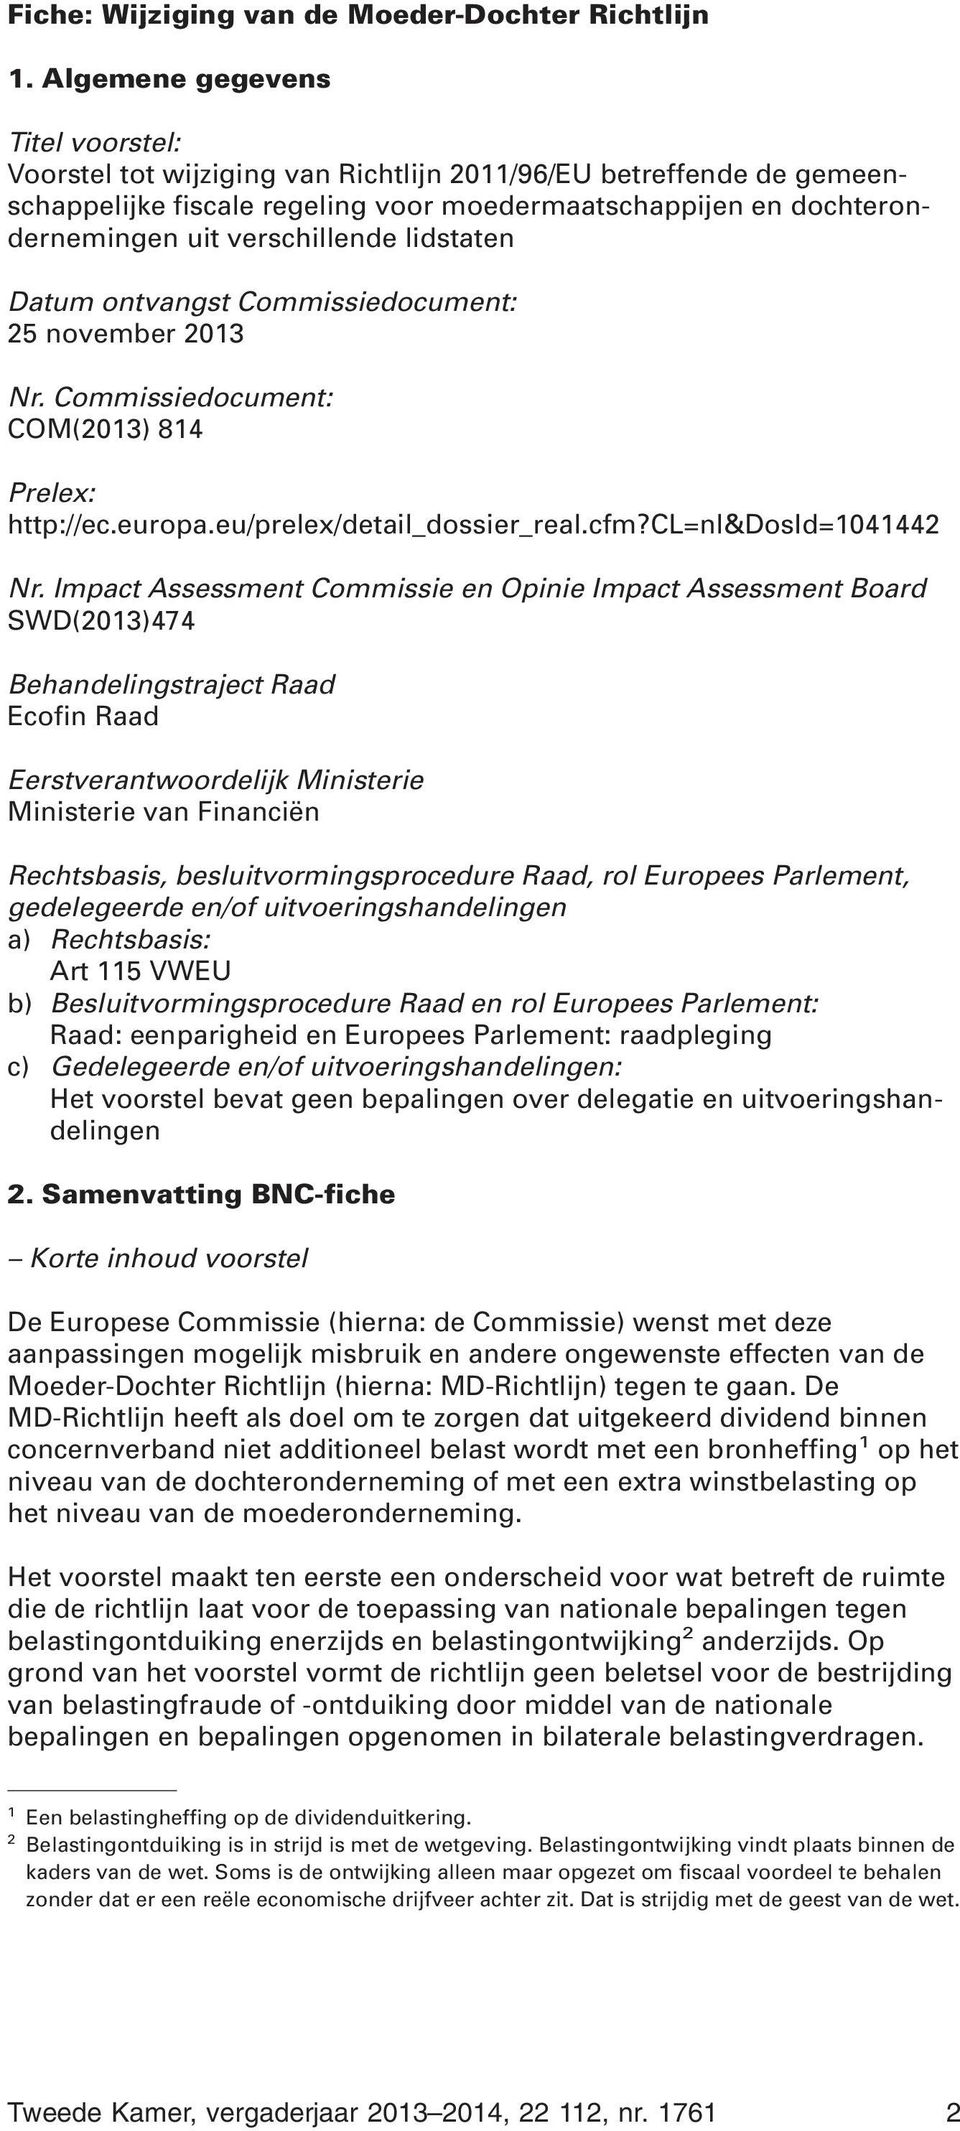 verschillende lidstaten Datum ontvangst Commissiedocument: 25 november 2013 Nr. Commissiedocument: COM(2013) 814 Prelex: http://ec.europa.eu/prelex/detail_dossier_real.cfm?cl=nl&dosid=1041442 Nr.